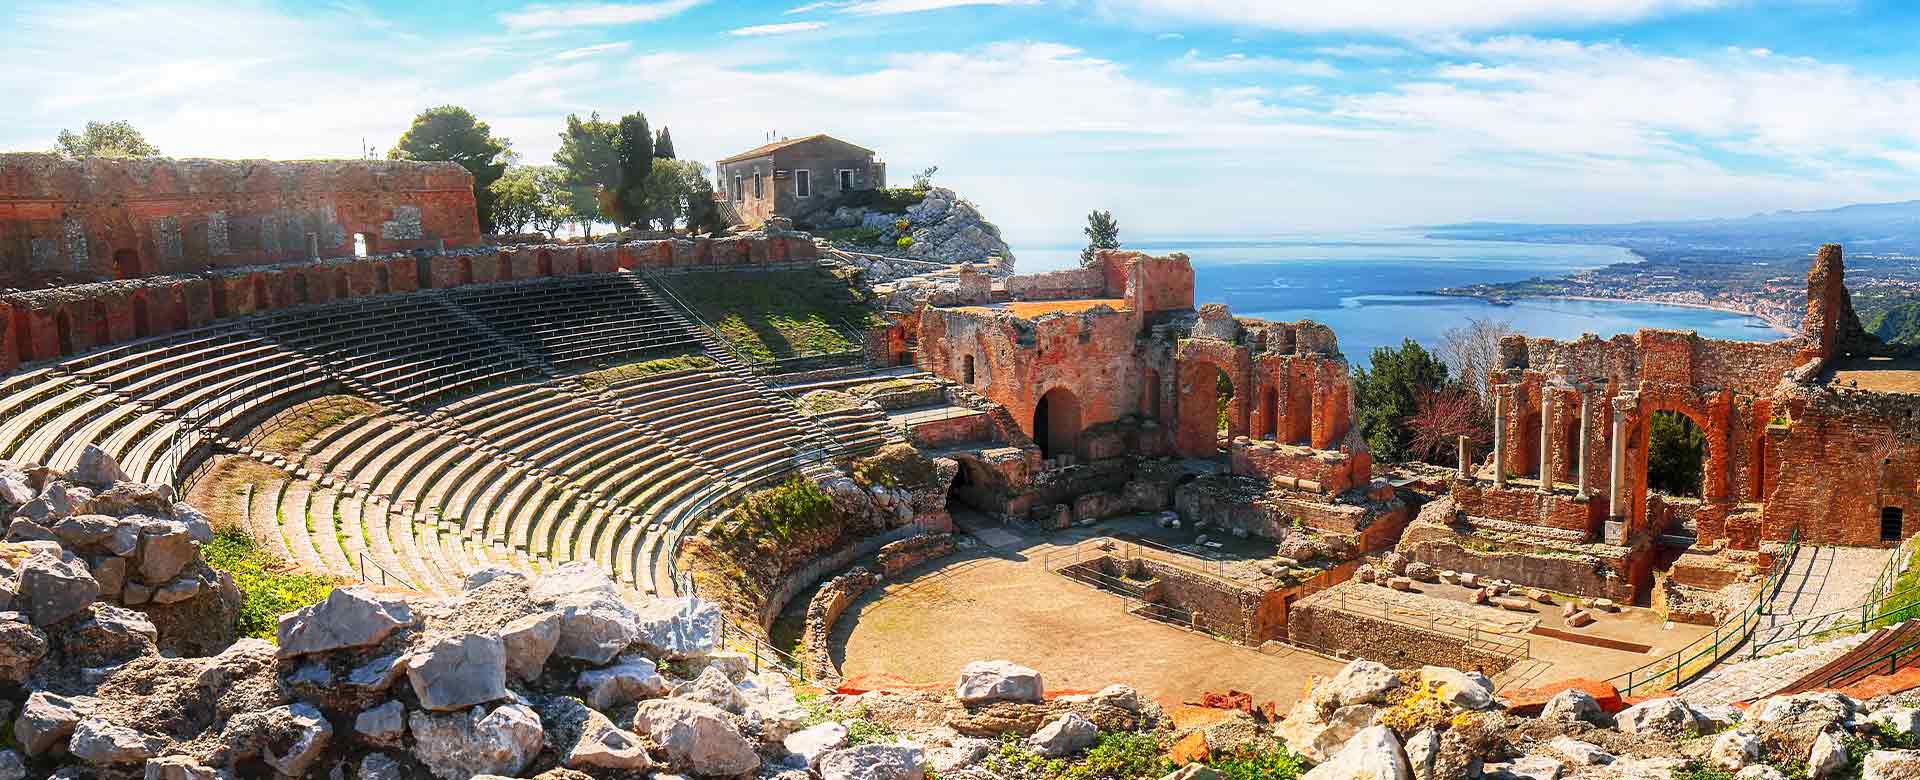 Immagine del Teatro Antico di Taormina